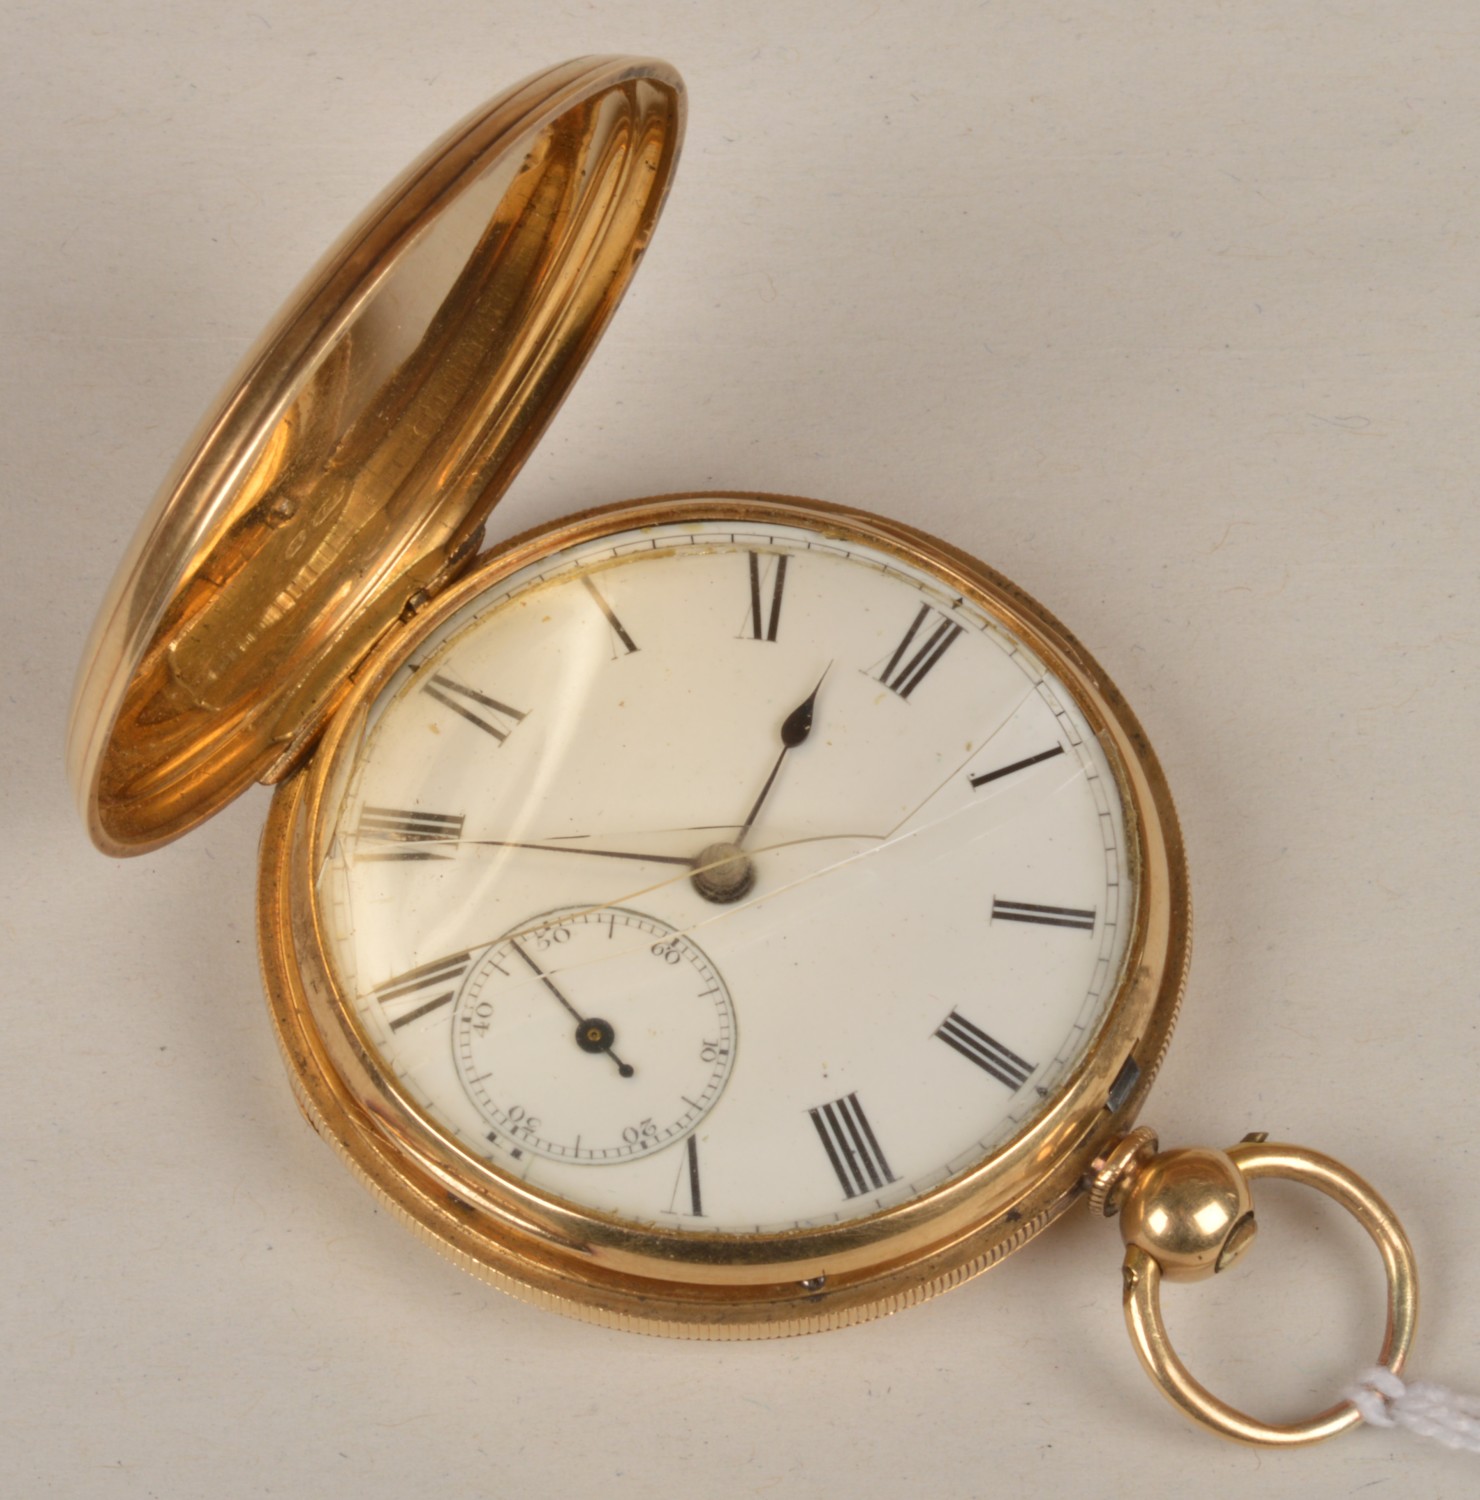 An 18 carat gold hunter pocket watch by John Hutton of 10 Mark Lane London, no. 893, the four piece